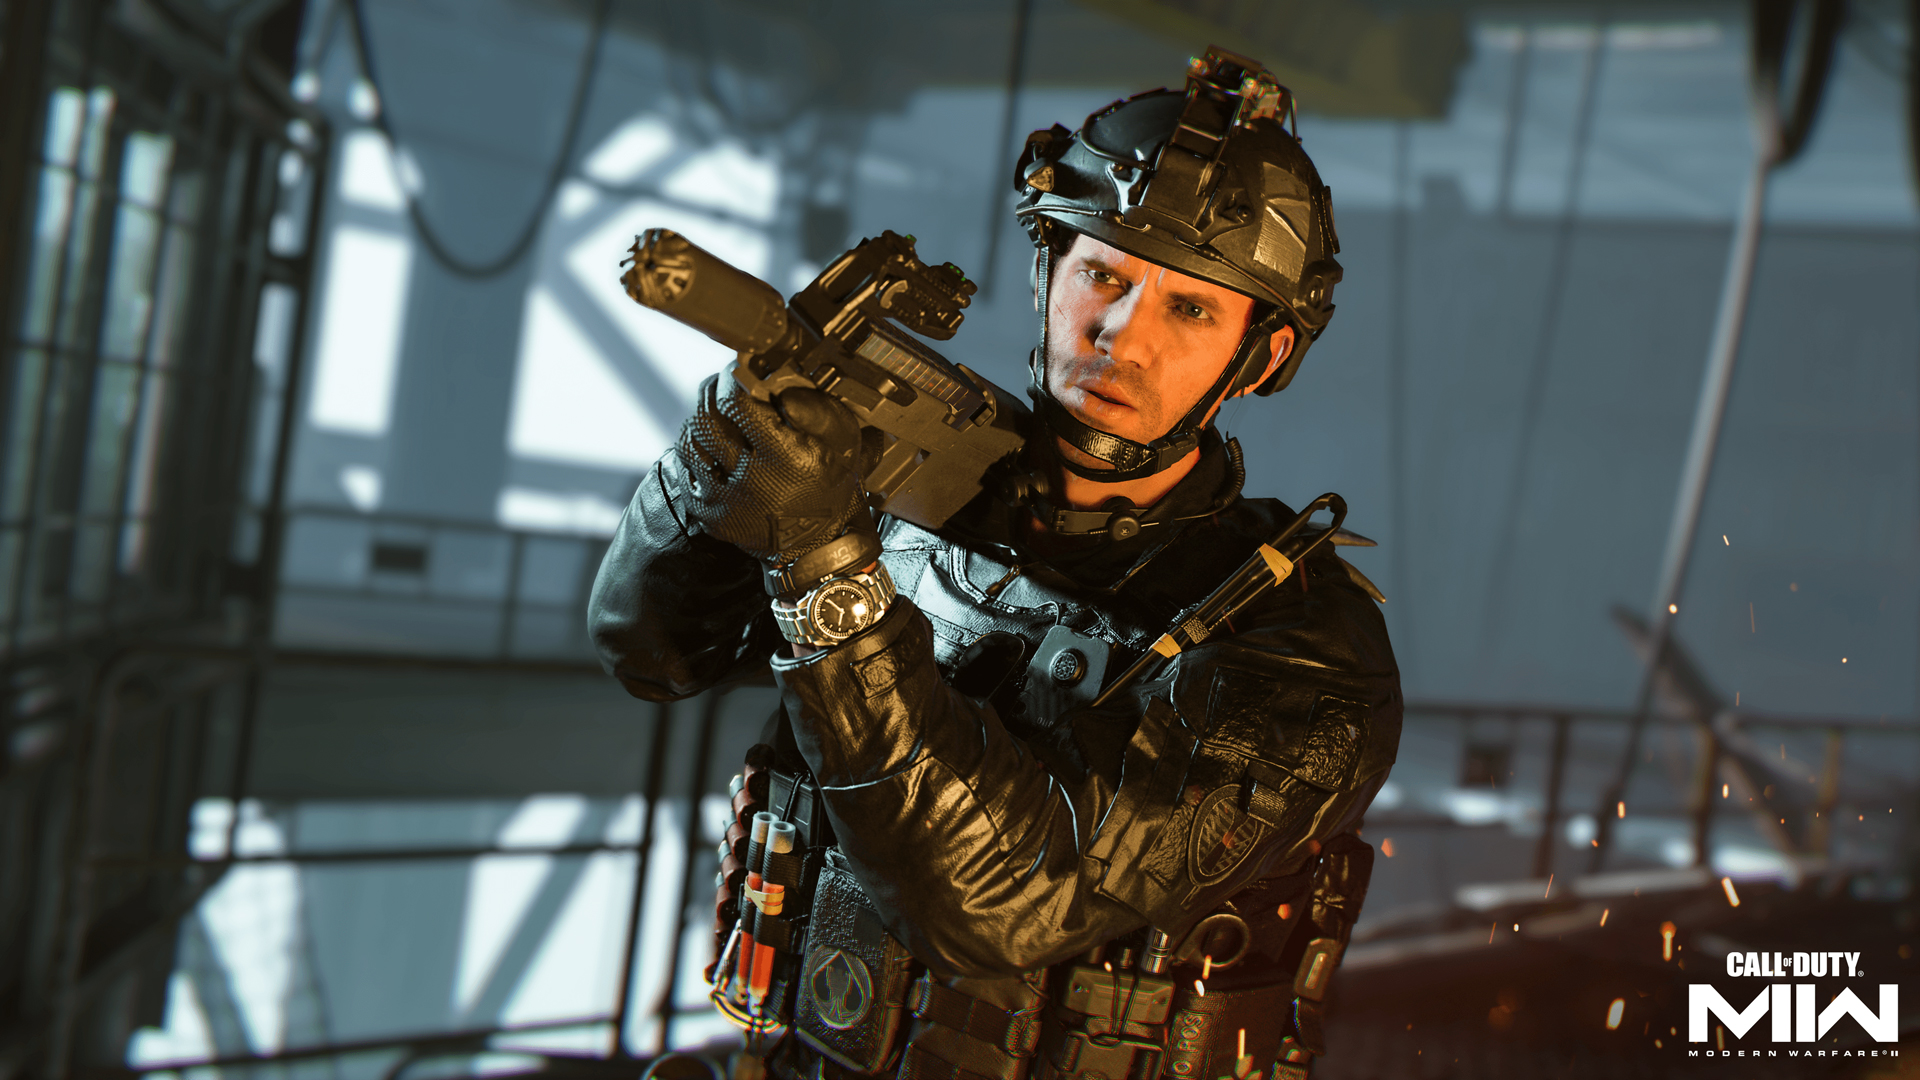 How to view Modern Warfare 2 upcoming skins ahead of Season 1